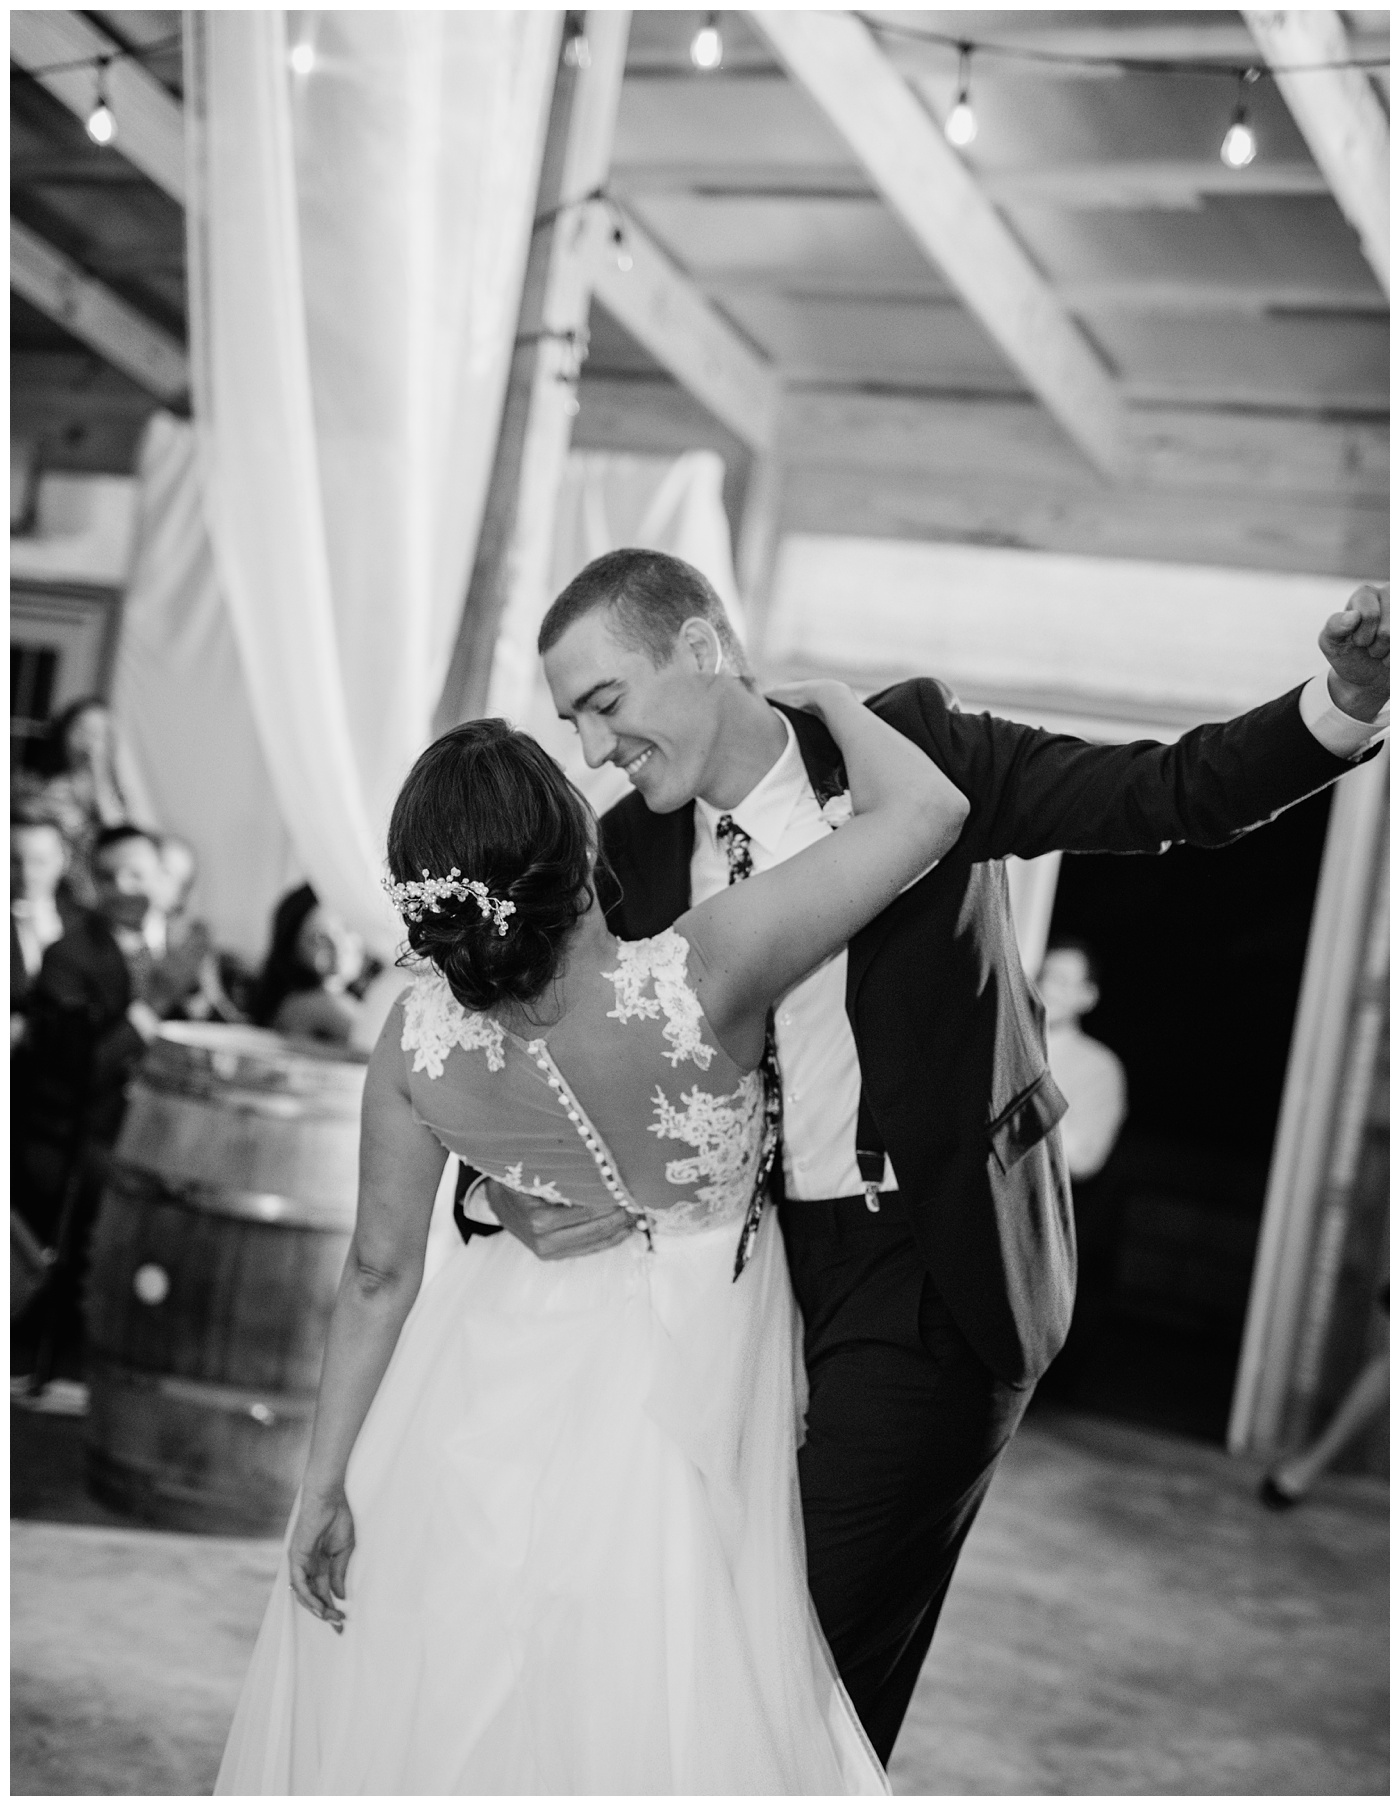 DelFosse Vineyard couple dancing during their reception